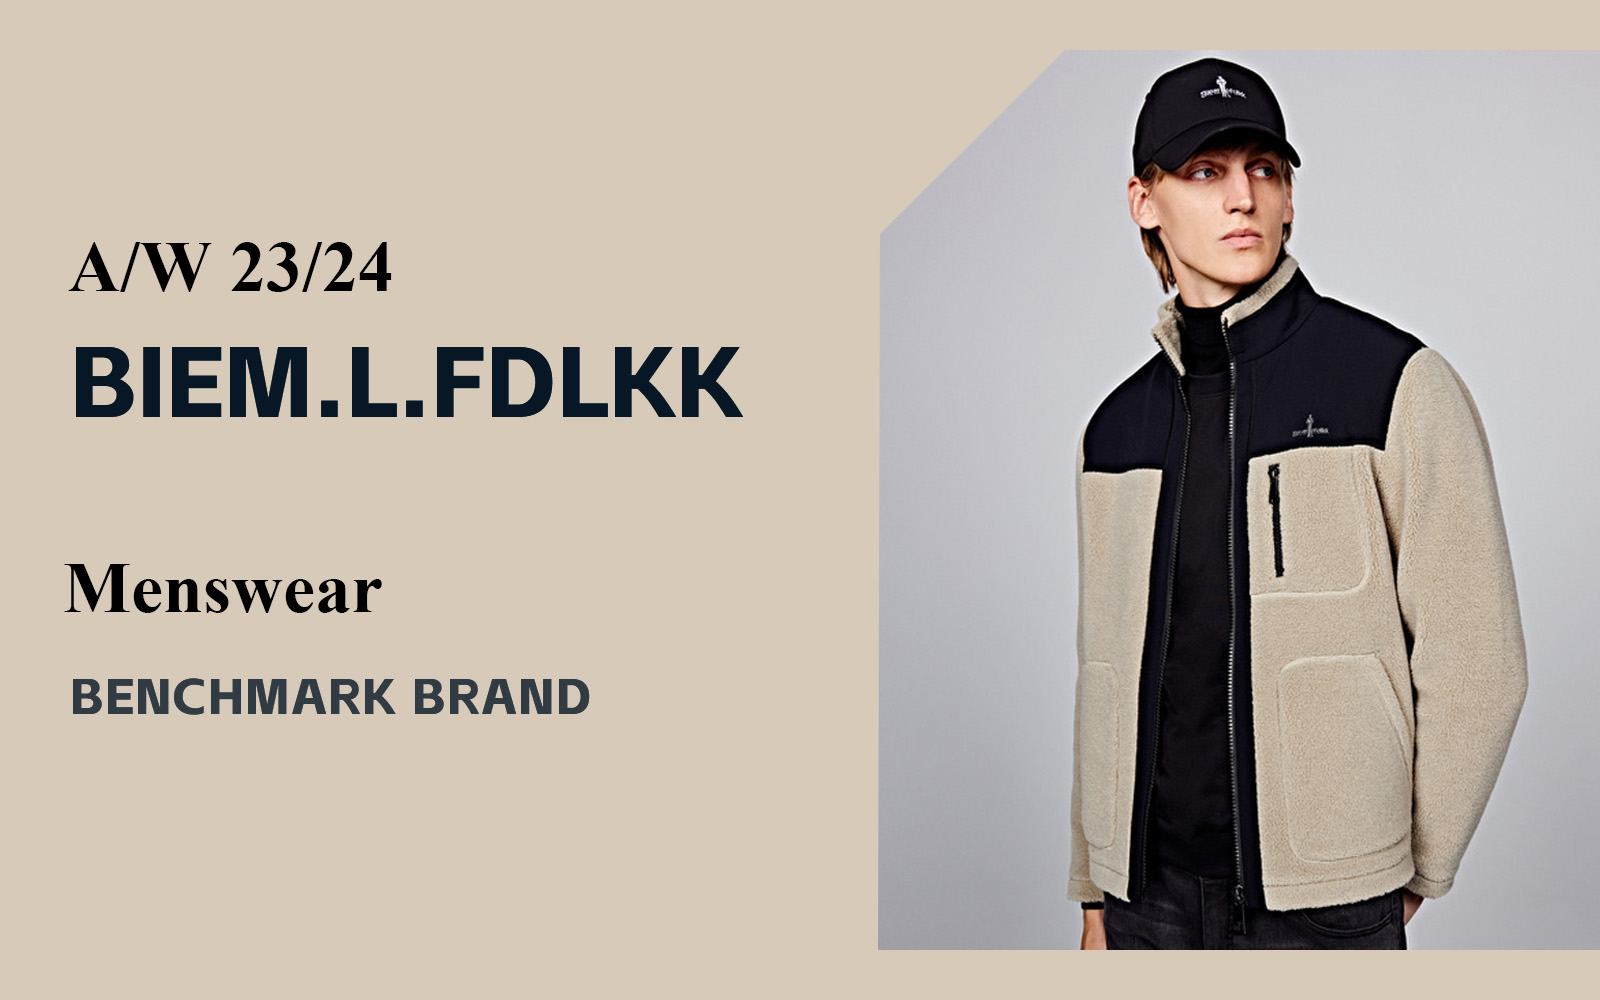 The Analysis of BIEM.L.FDLKK The Benchmark Menswear Brand